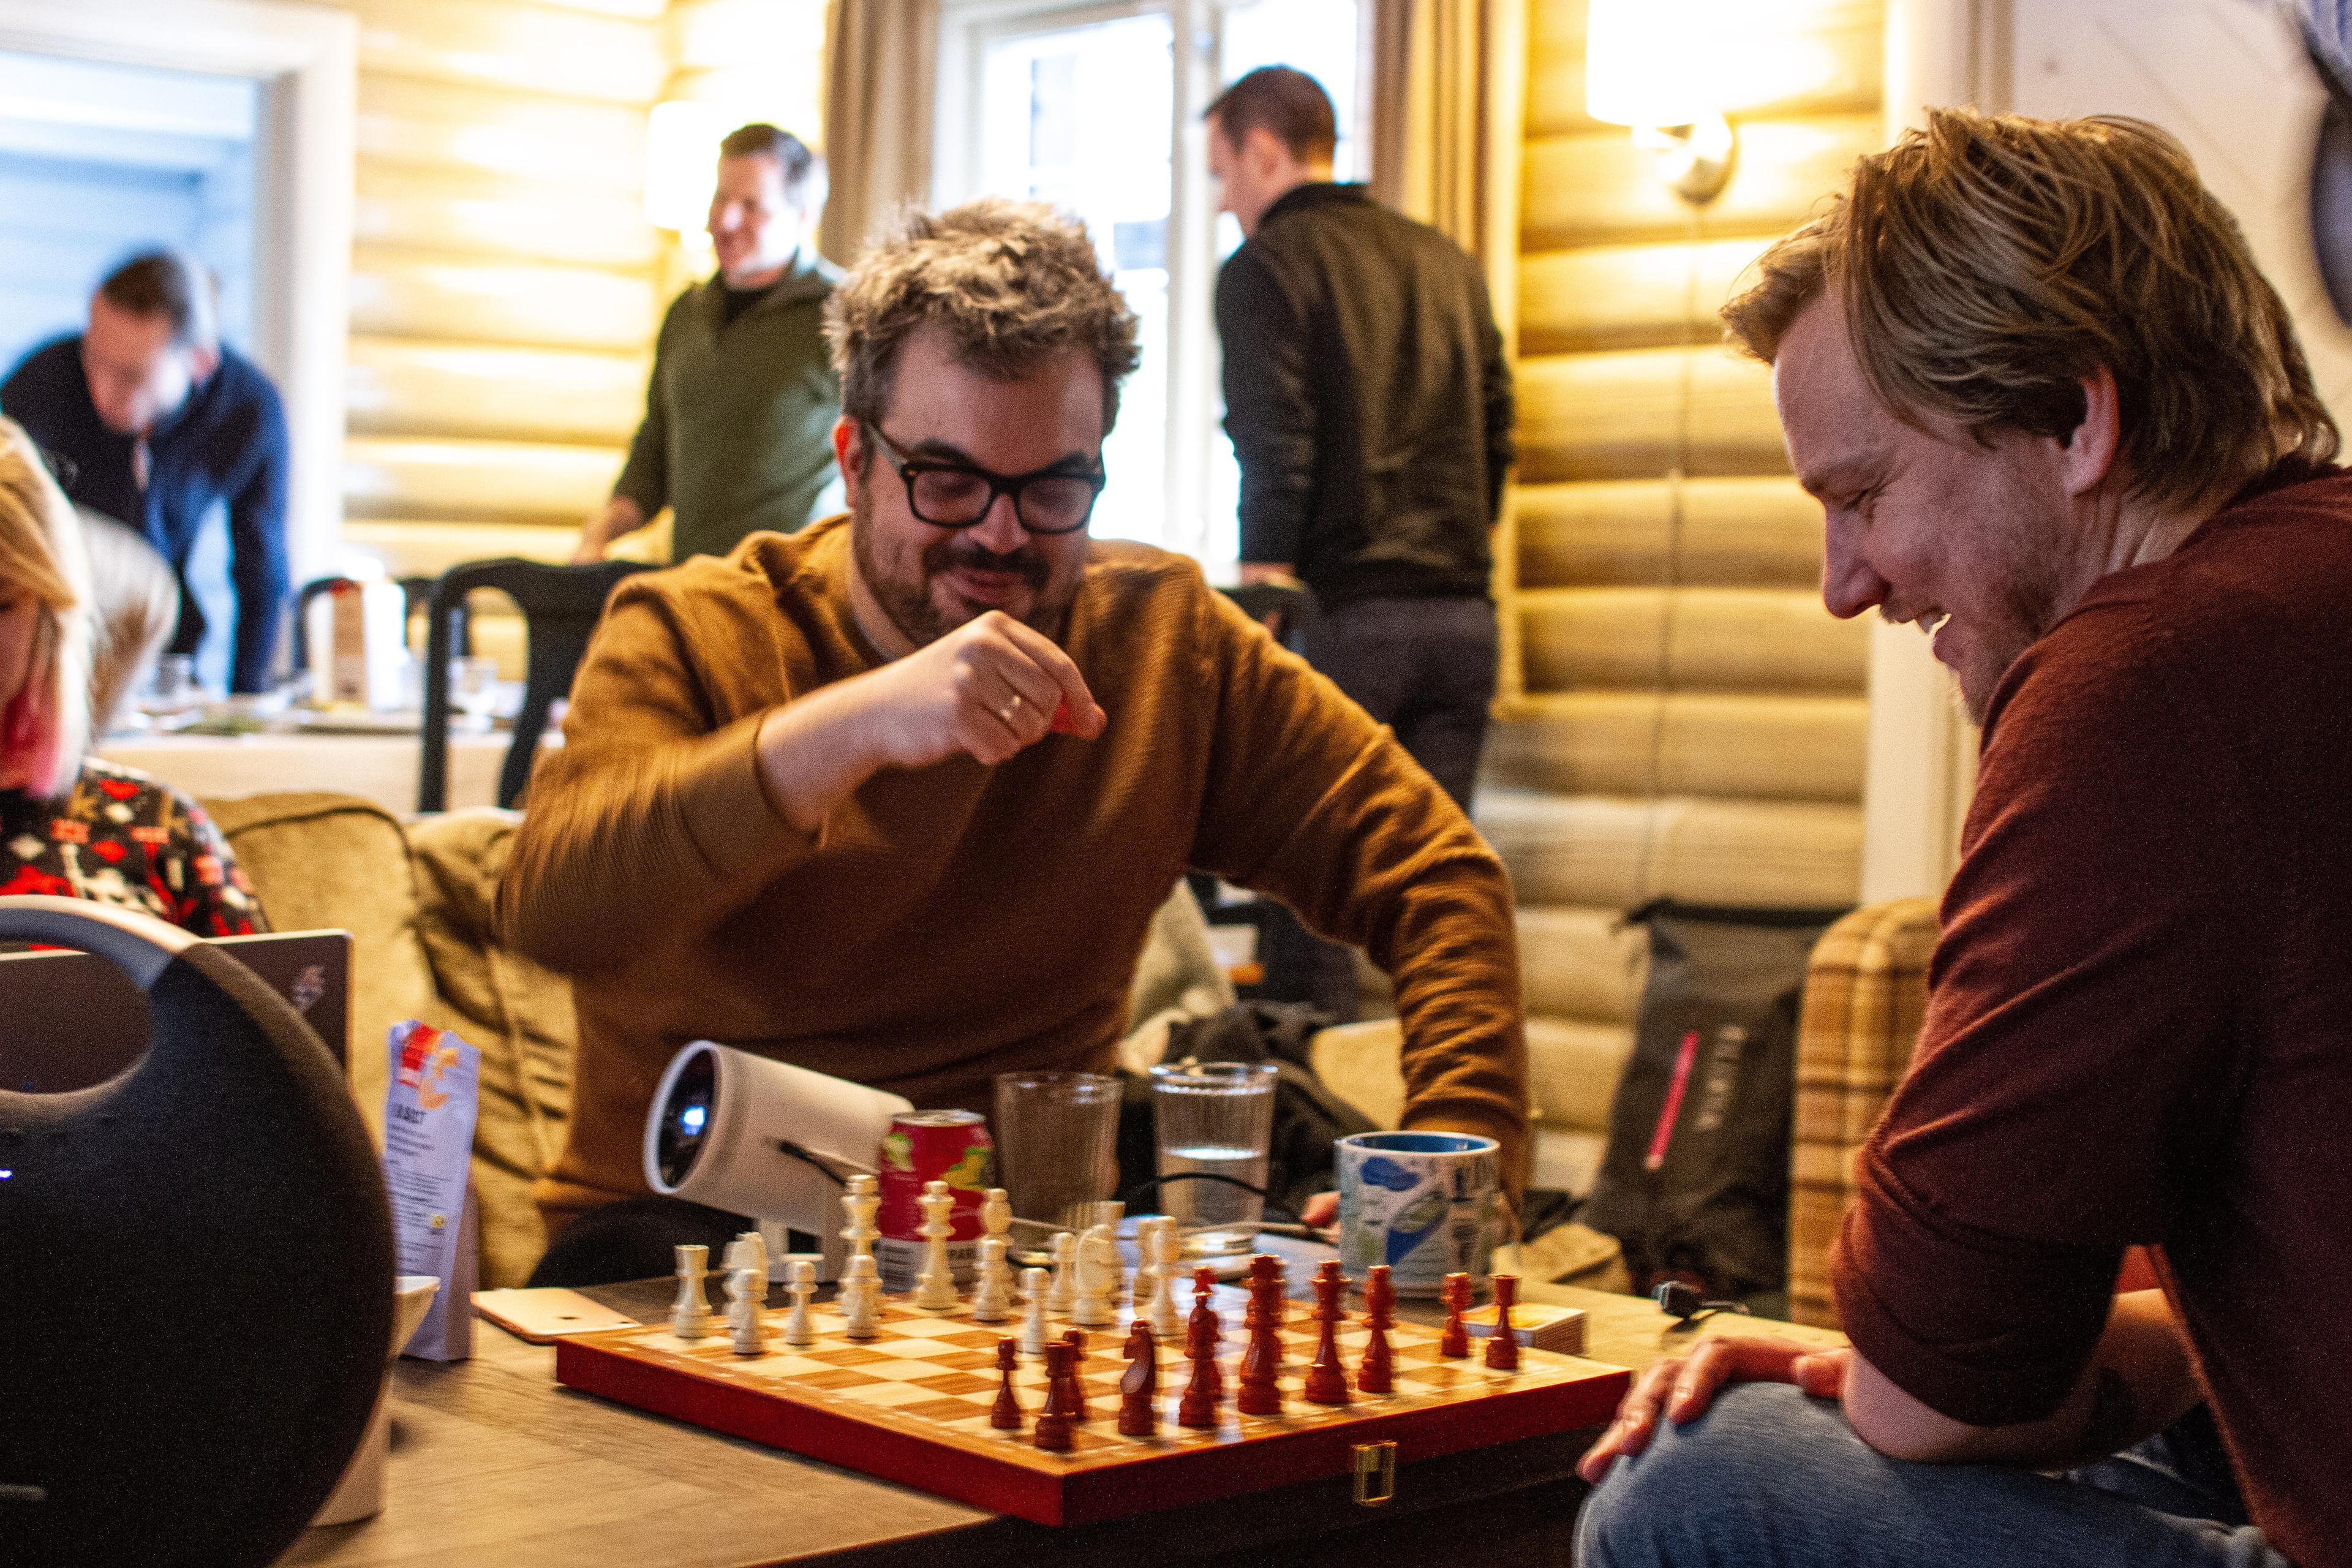 Playing chess at a company retreat